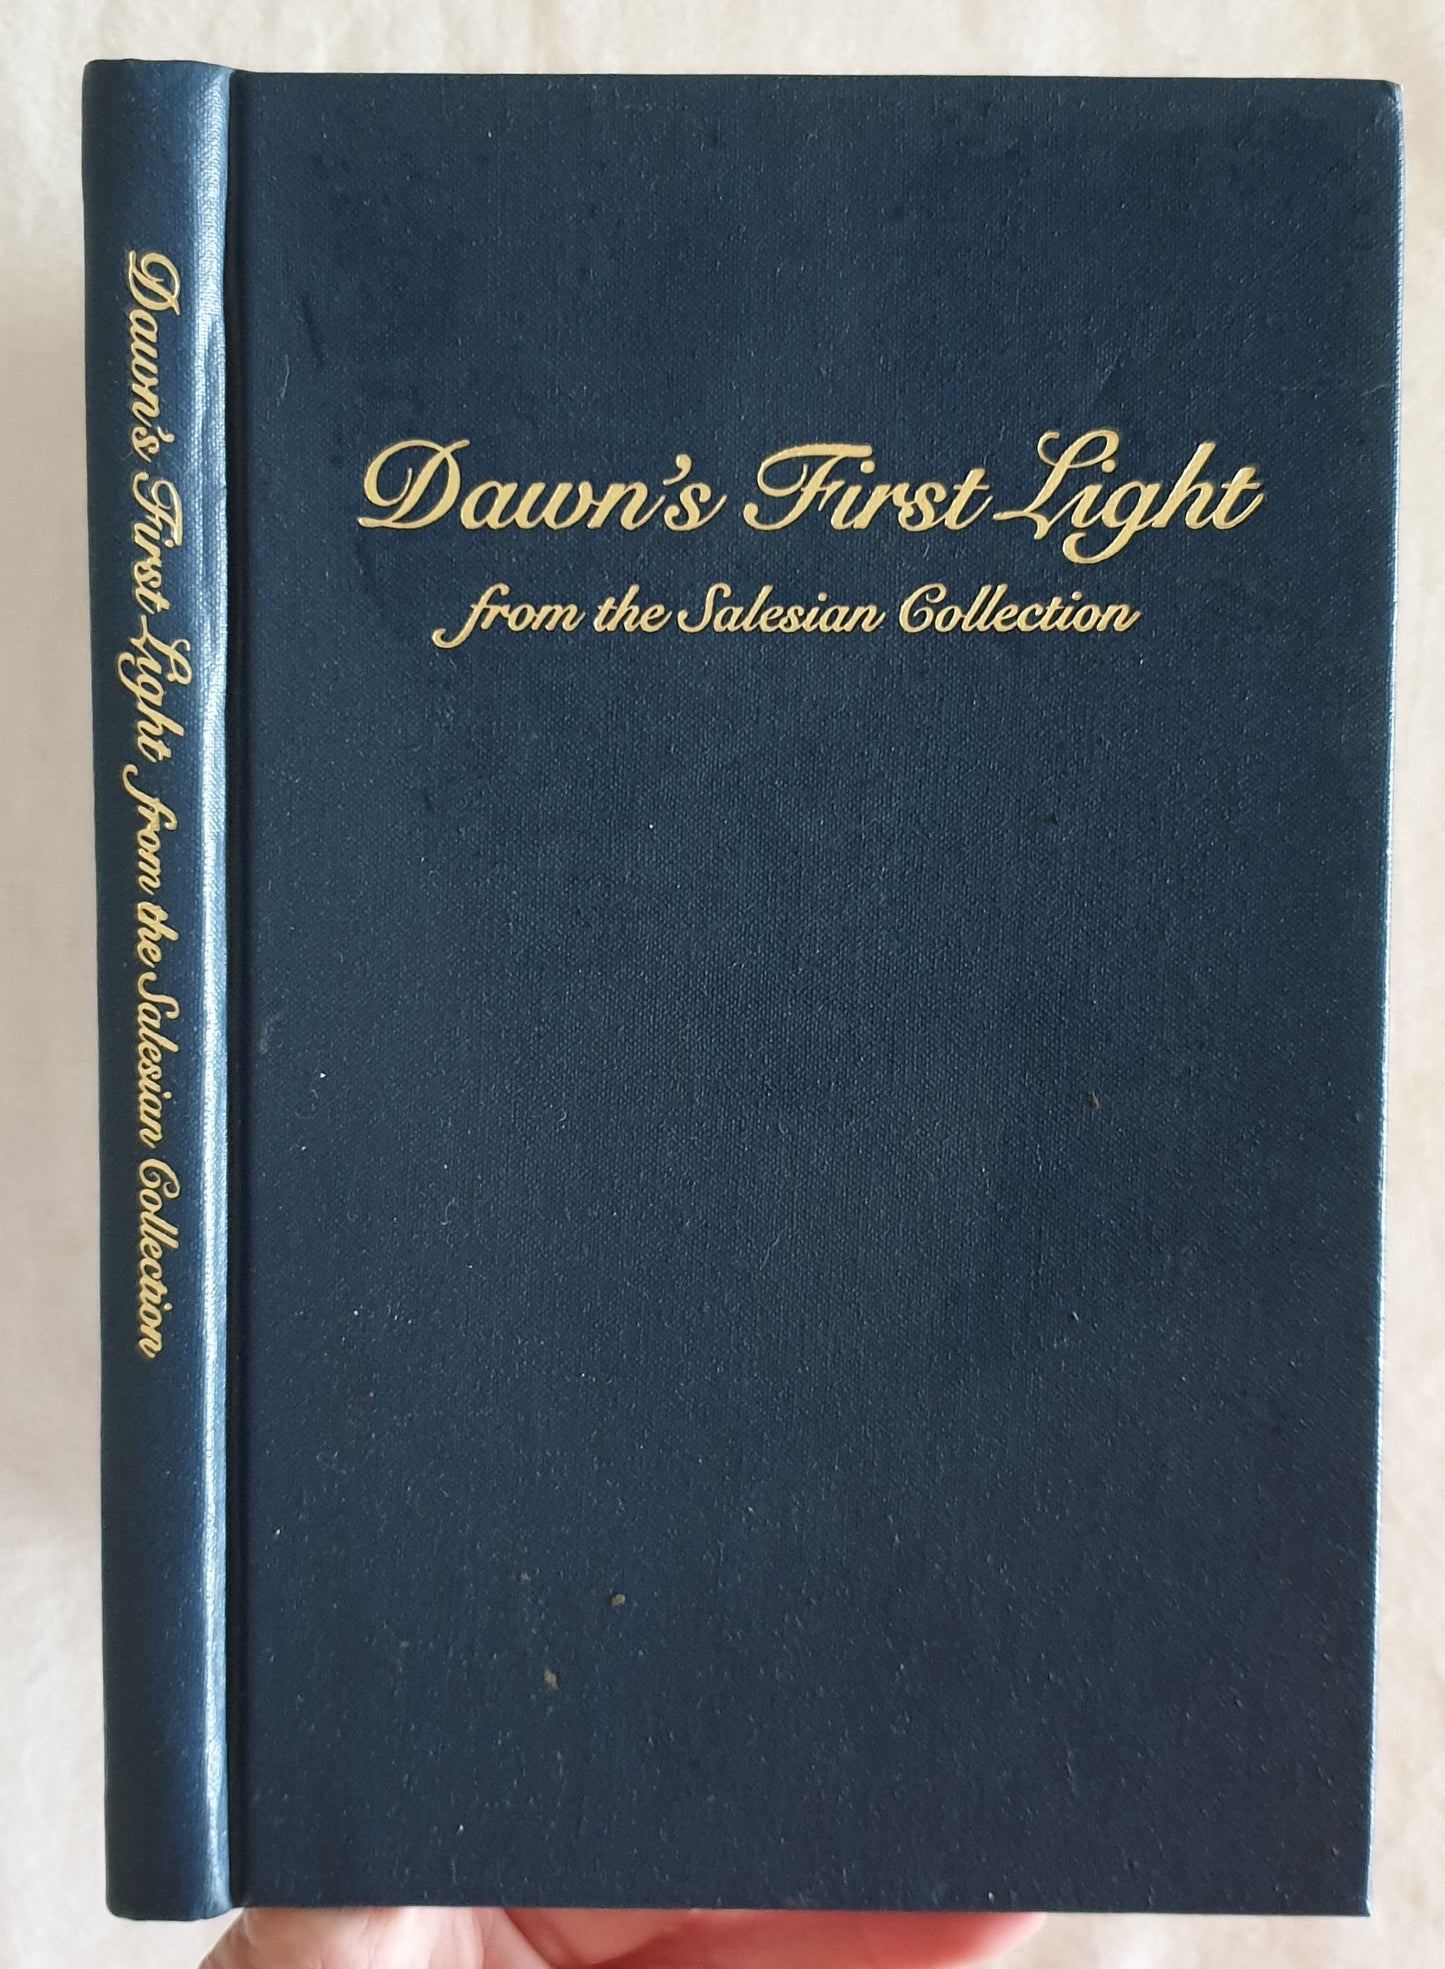 Dawn's First Light by Jennifer Grimaldi